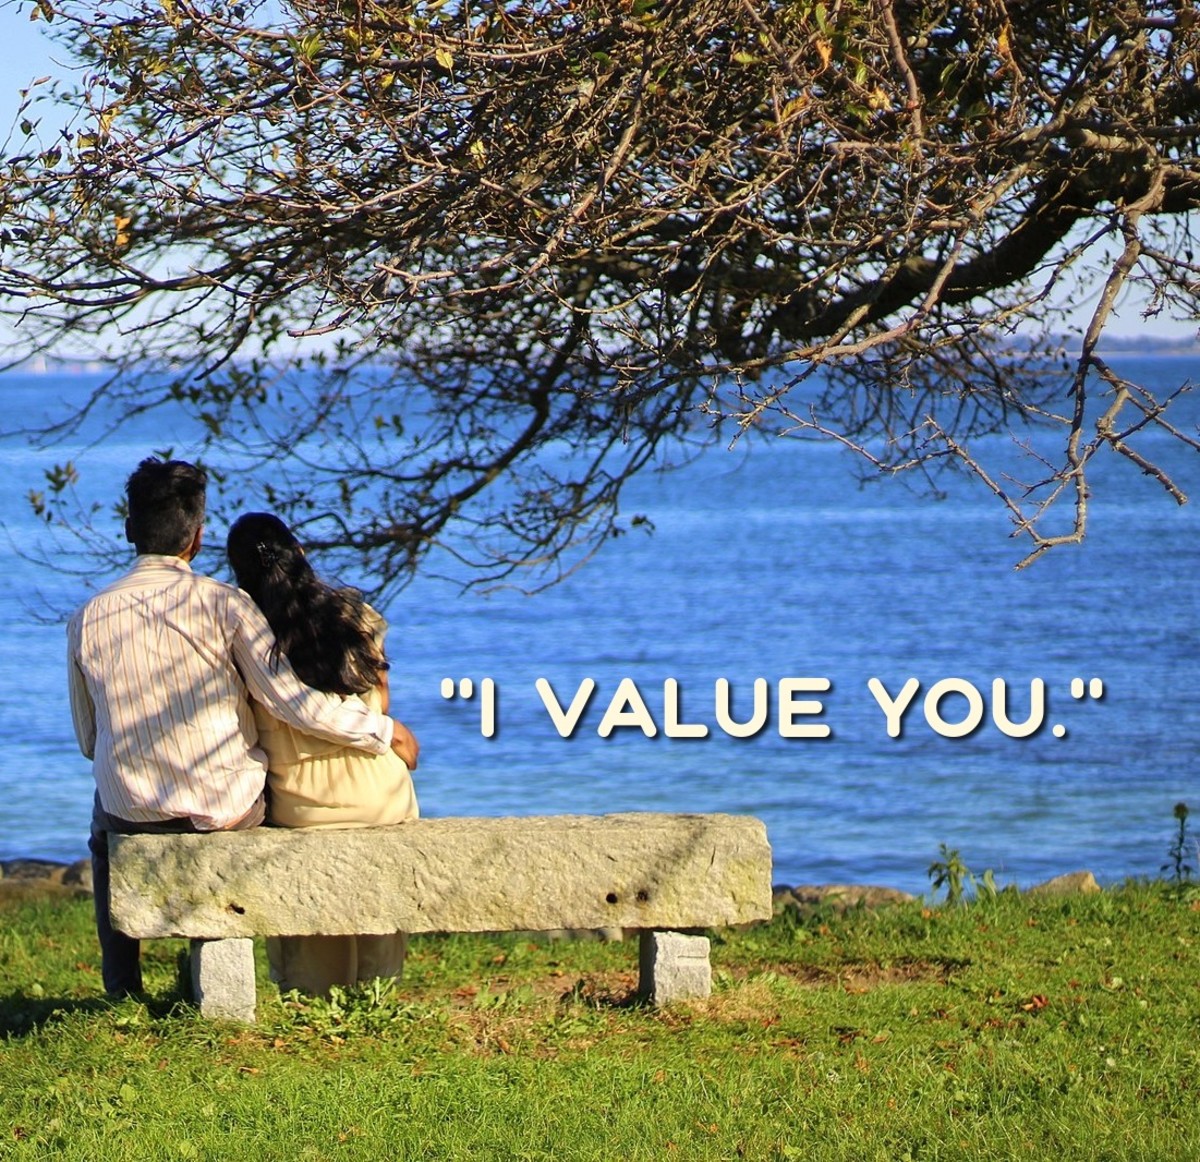 I love (value) you.